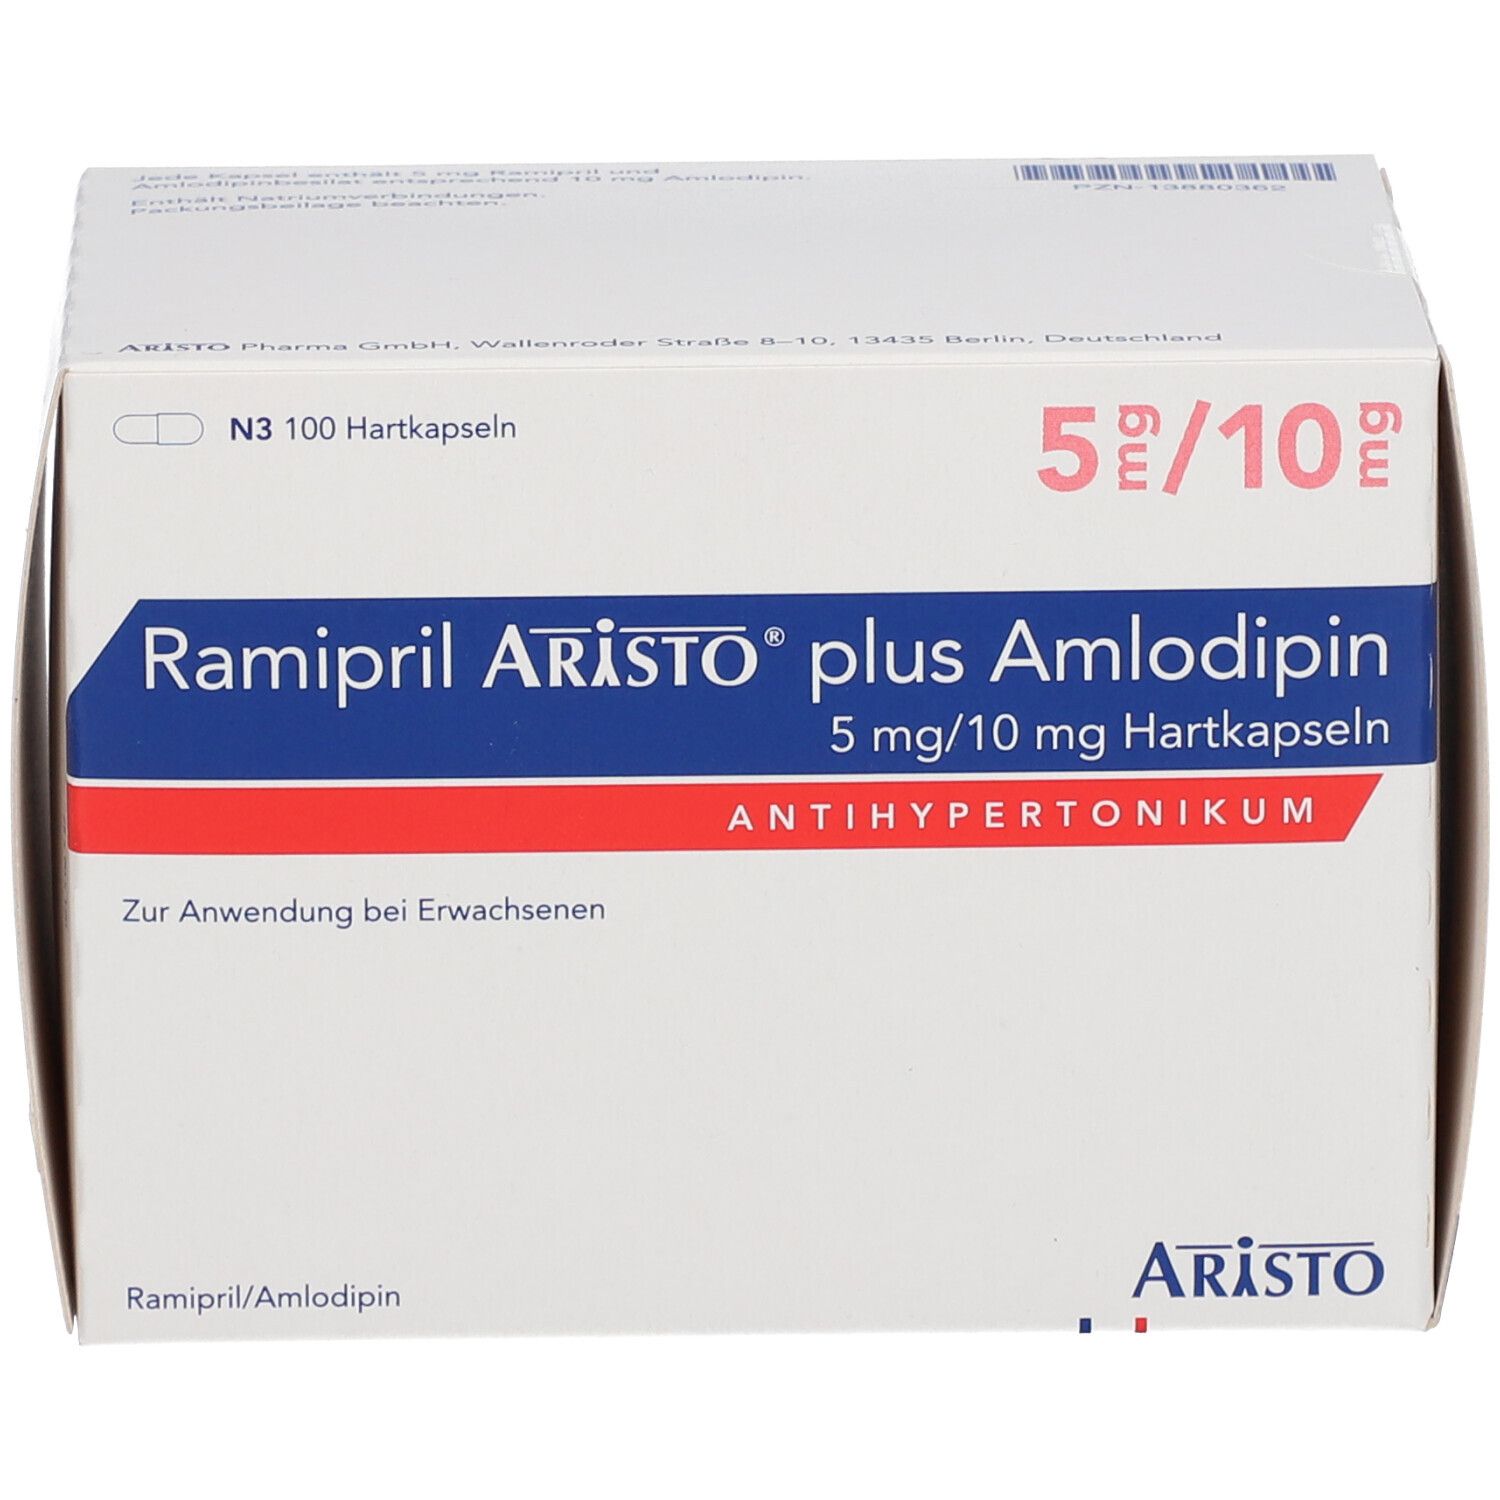 Ramipril Aristo® plus Amlodipin 5 mg/10 mg